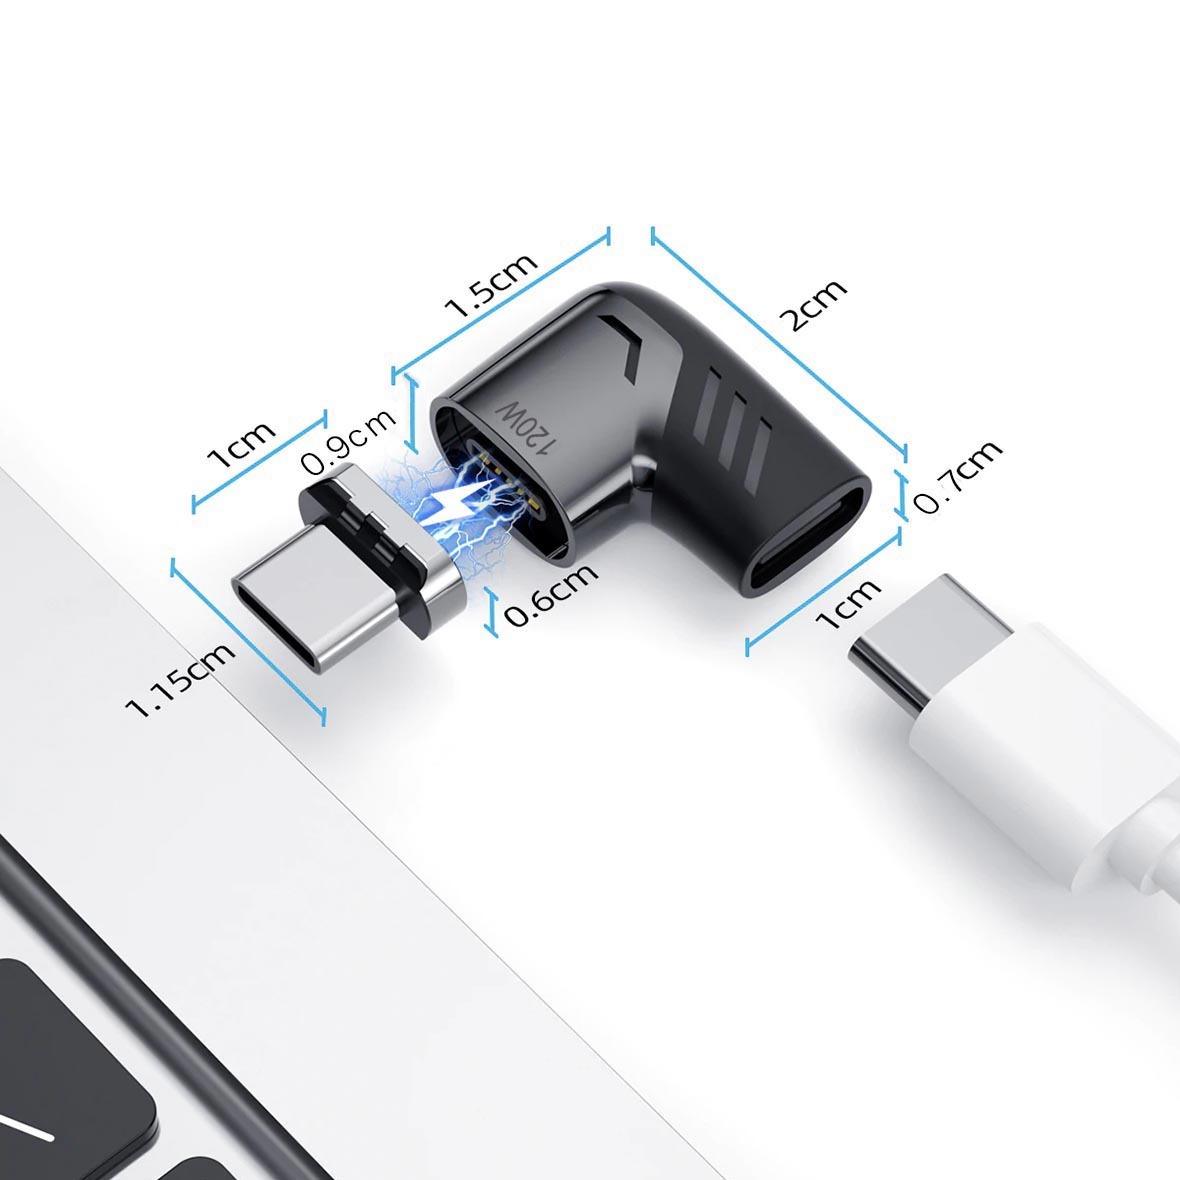 送料込】100W から120W へUP 120W USB-C TYPE-C PD マグネットアダプター タイプC MacBook pro  iPad Pro 充電 データ転送